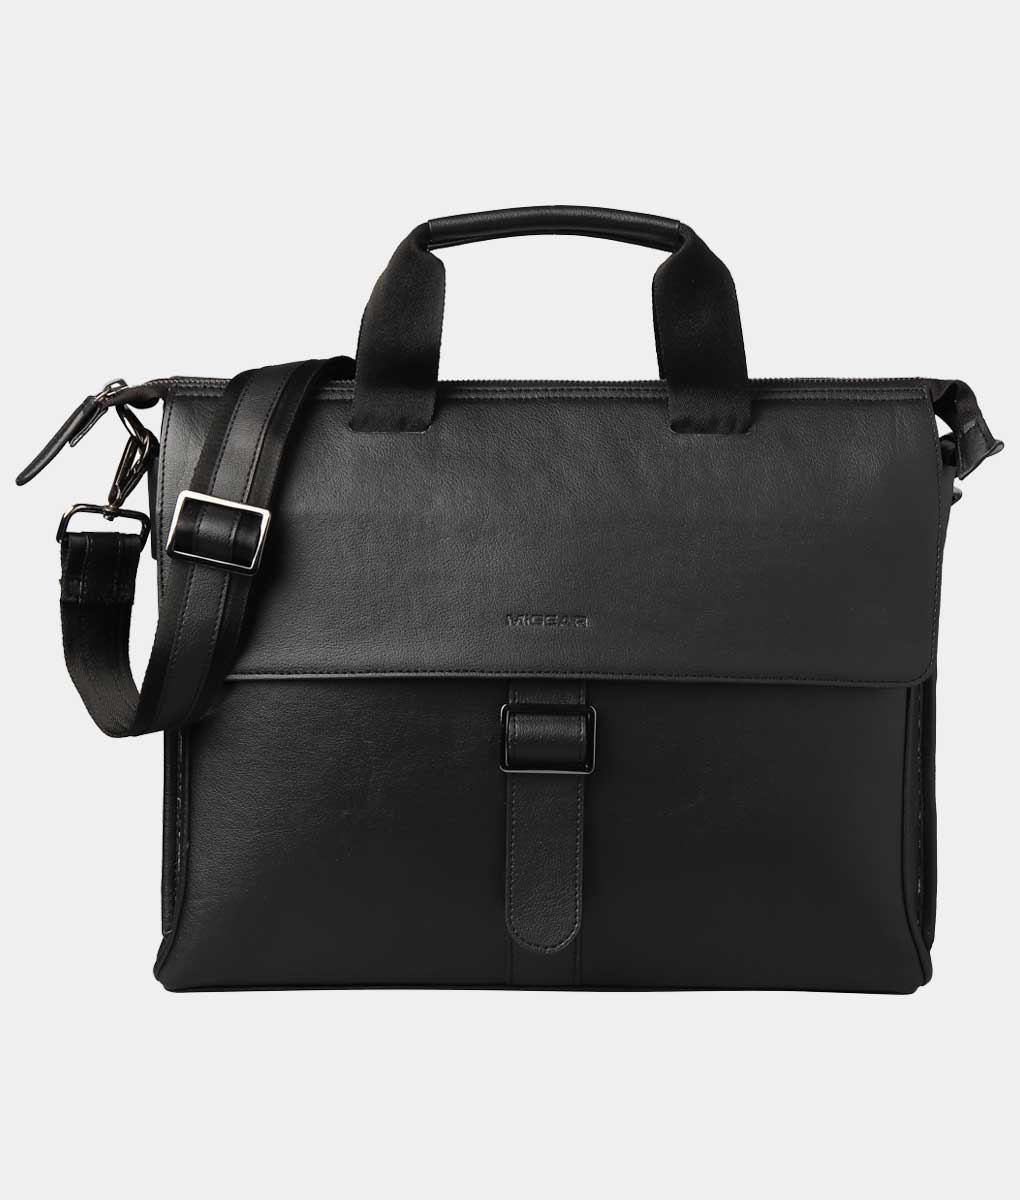 Manager's Choice Laptop Bag